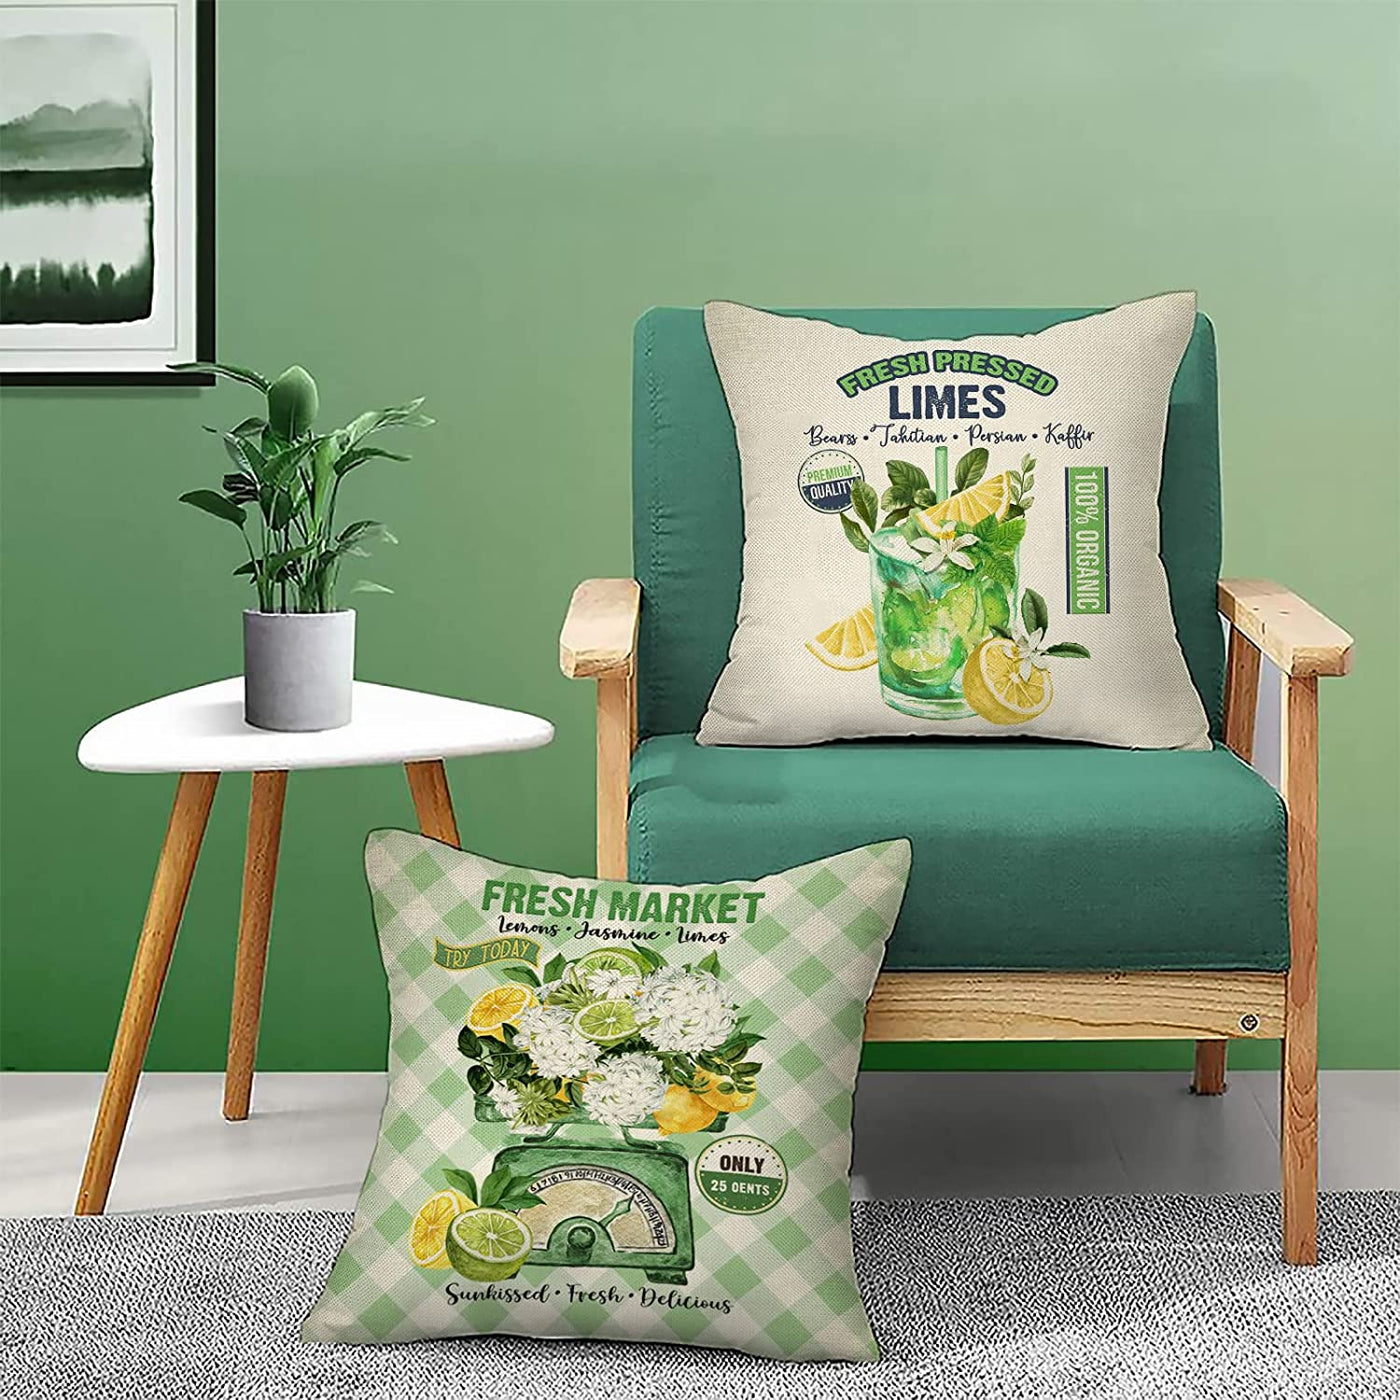 Set of 4 Summer Lime Lemon Green Gnome Decorative Pillow Cover